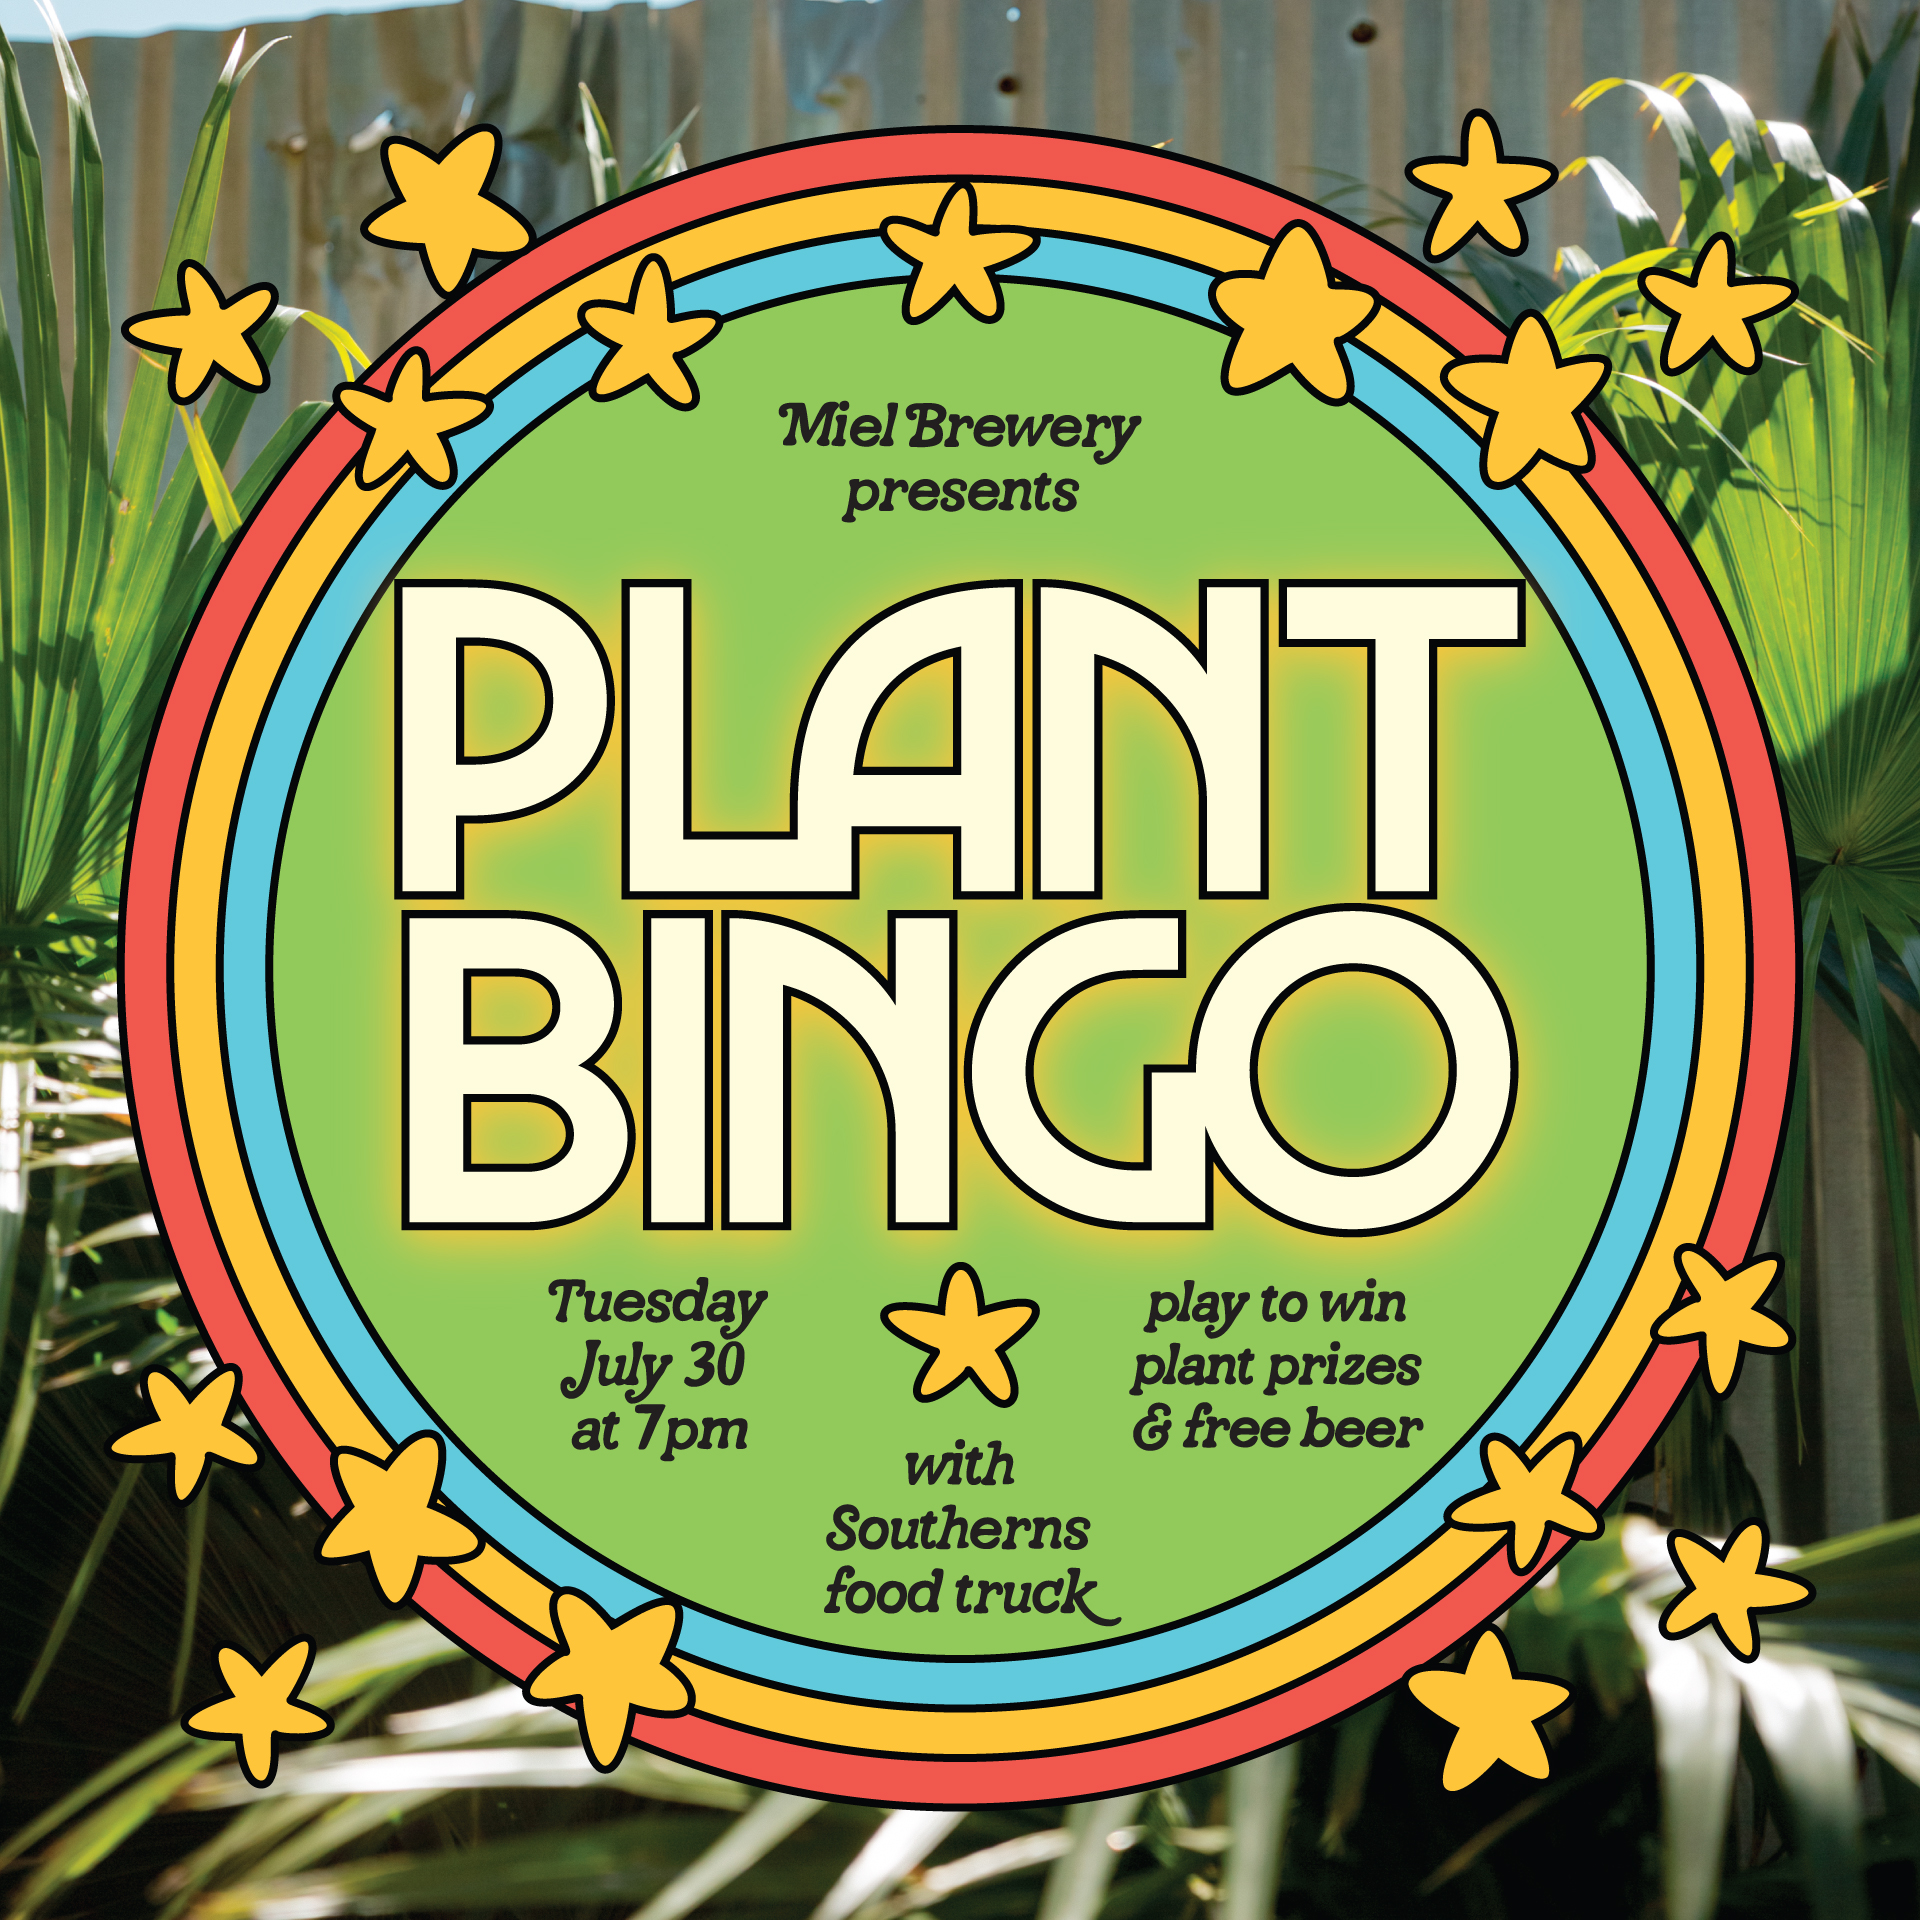 Plant Bingo at Miel Brewery square flyer